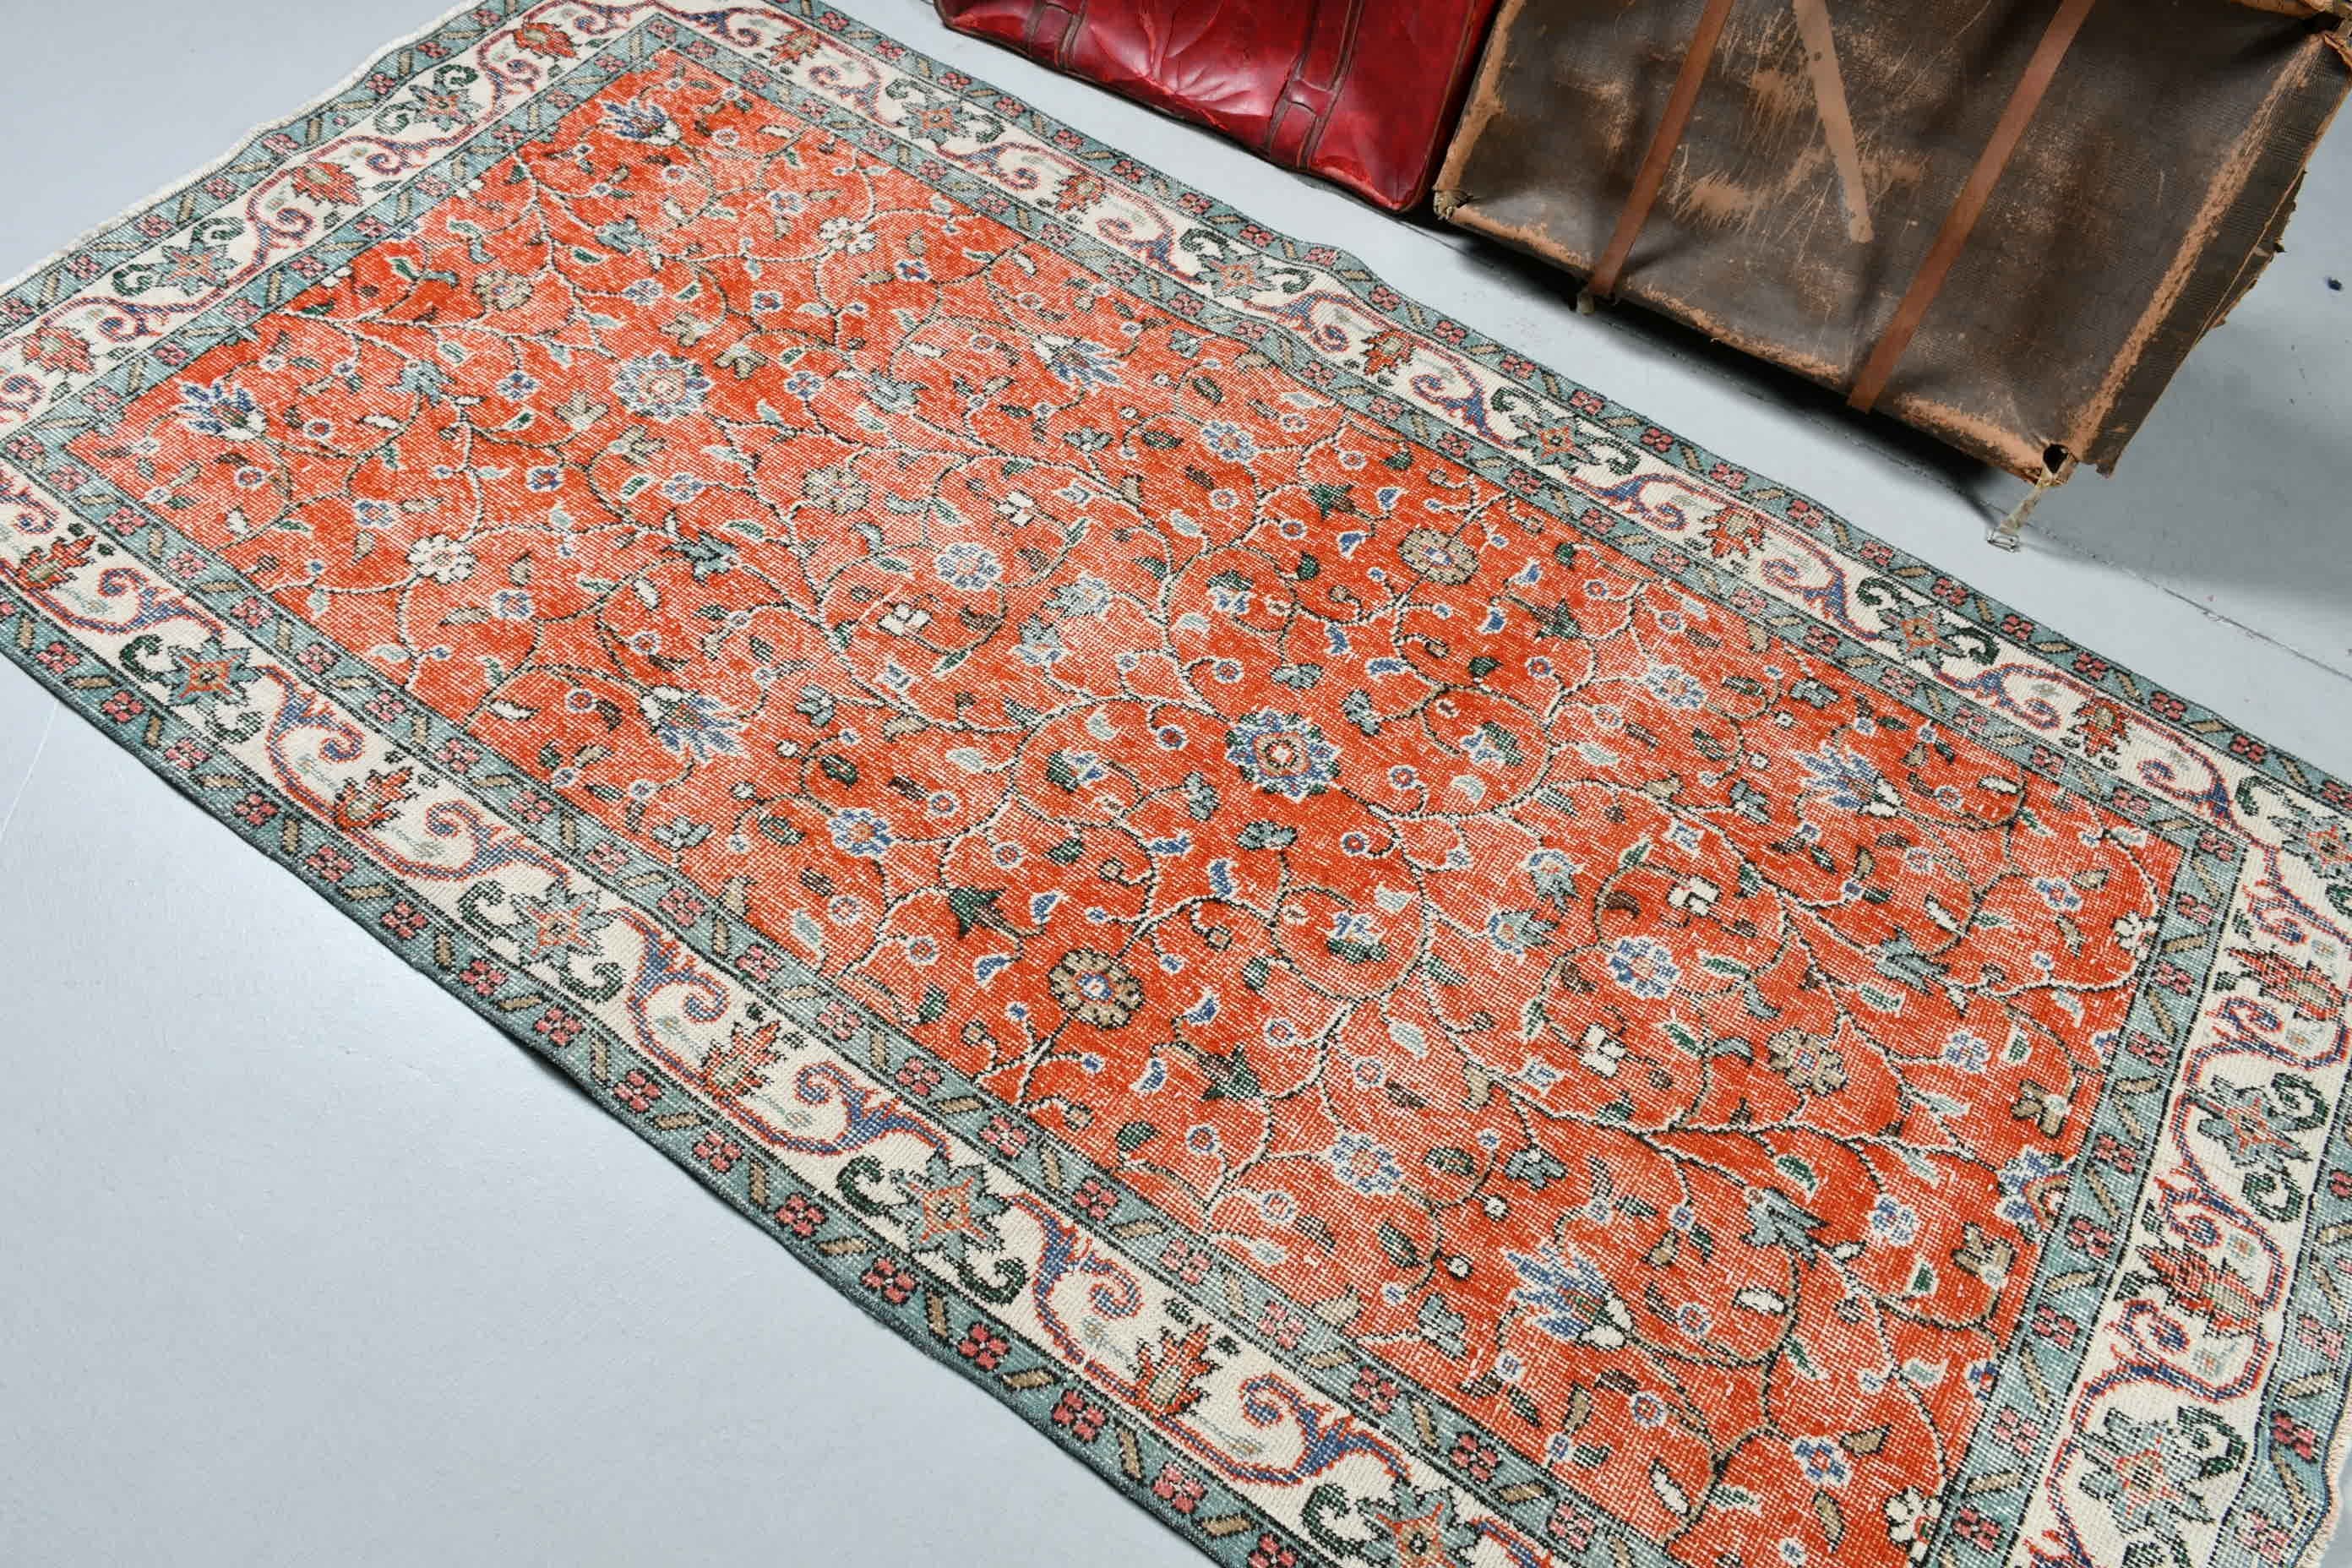 Anatolian Rugs, 3.8x7.3 ft Area Rug, Vintage Rug, Rugs for Dining Room, Living Room Rugs, Turkish Rug, Old Rugs, Orange Floor Rug, Cool Rug